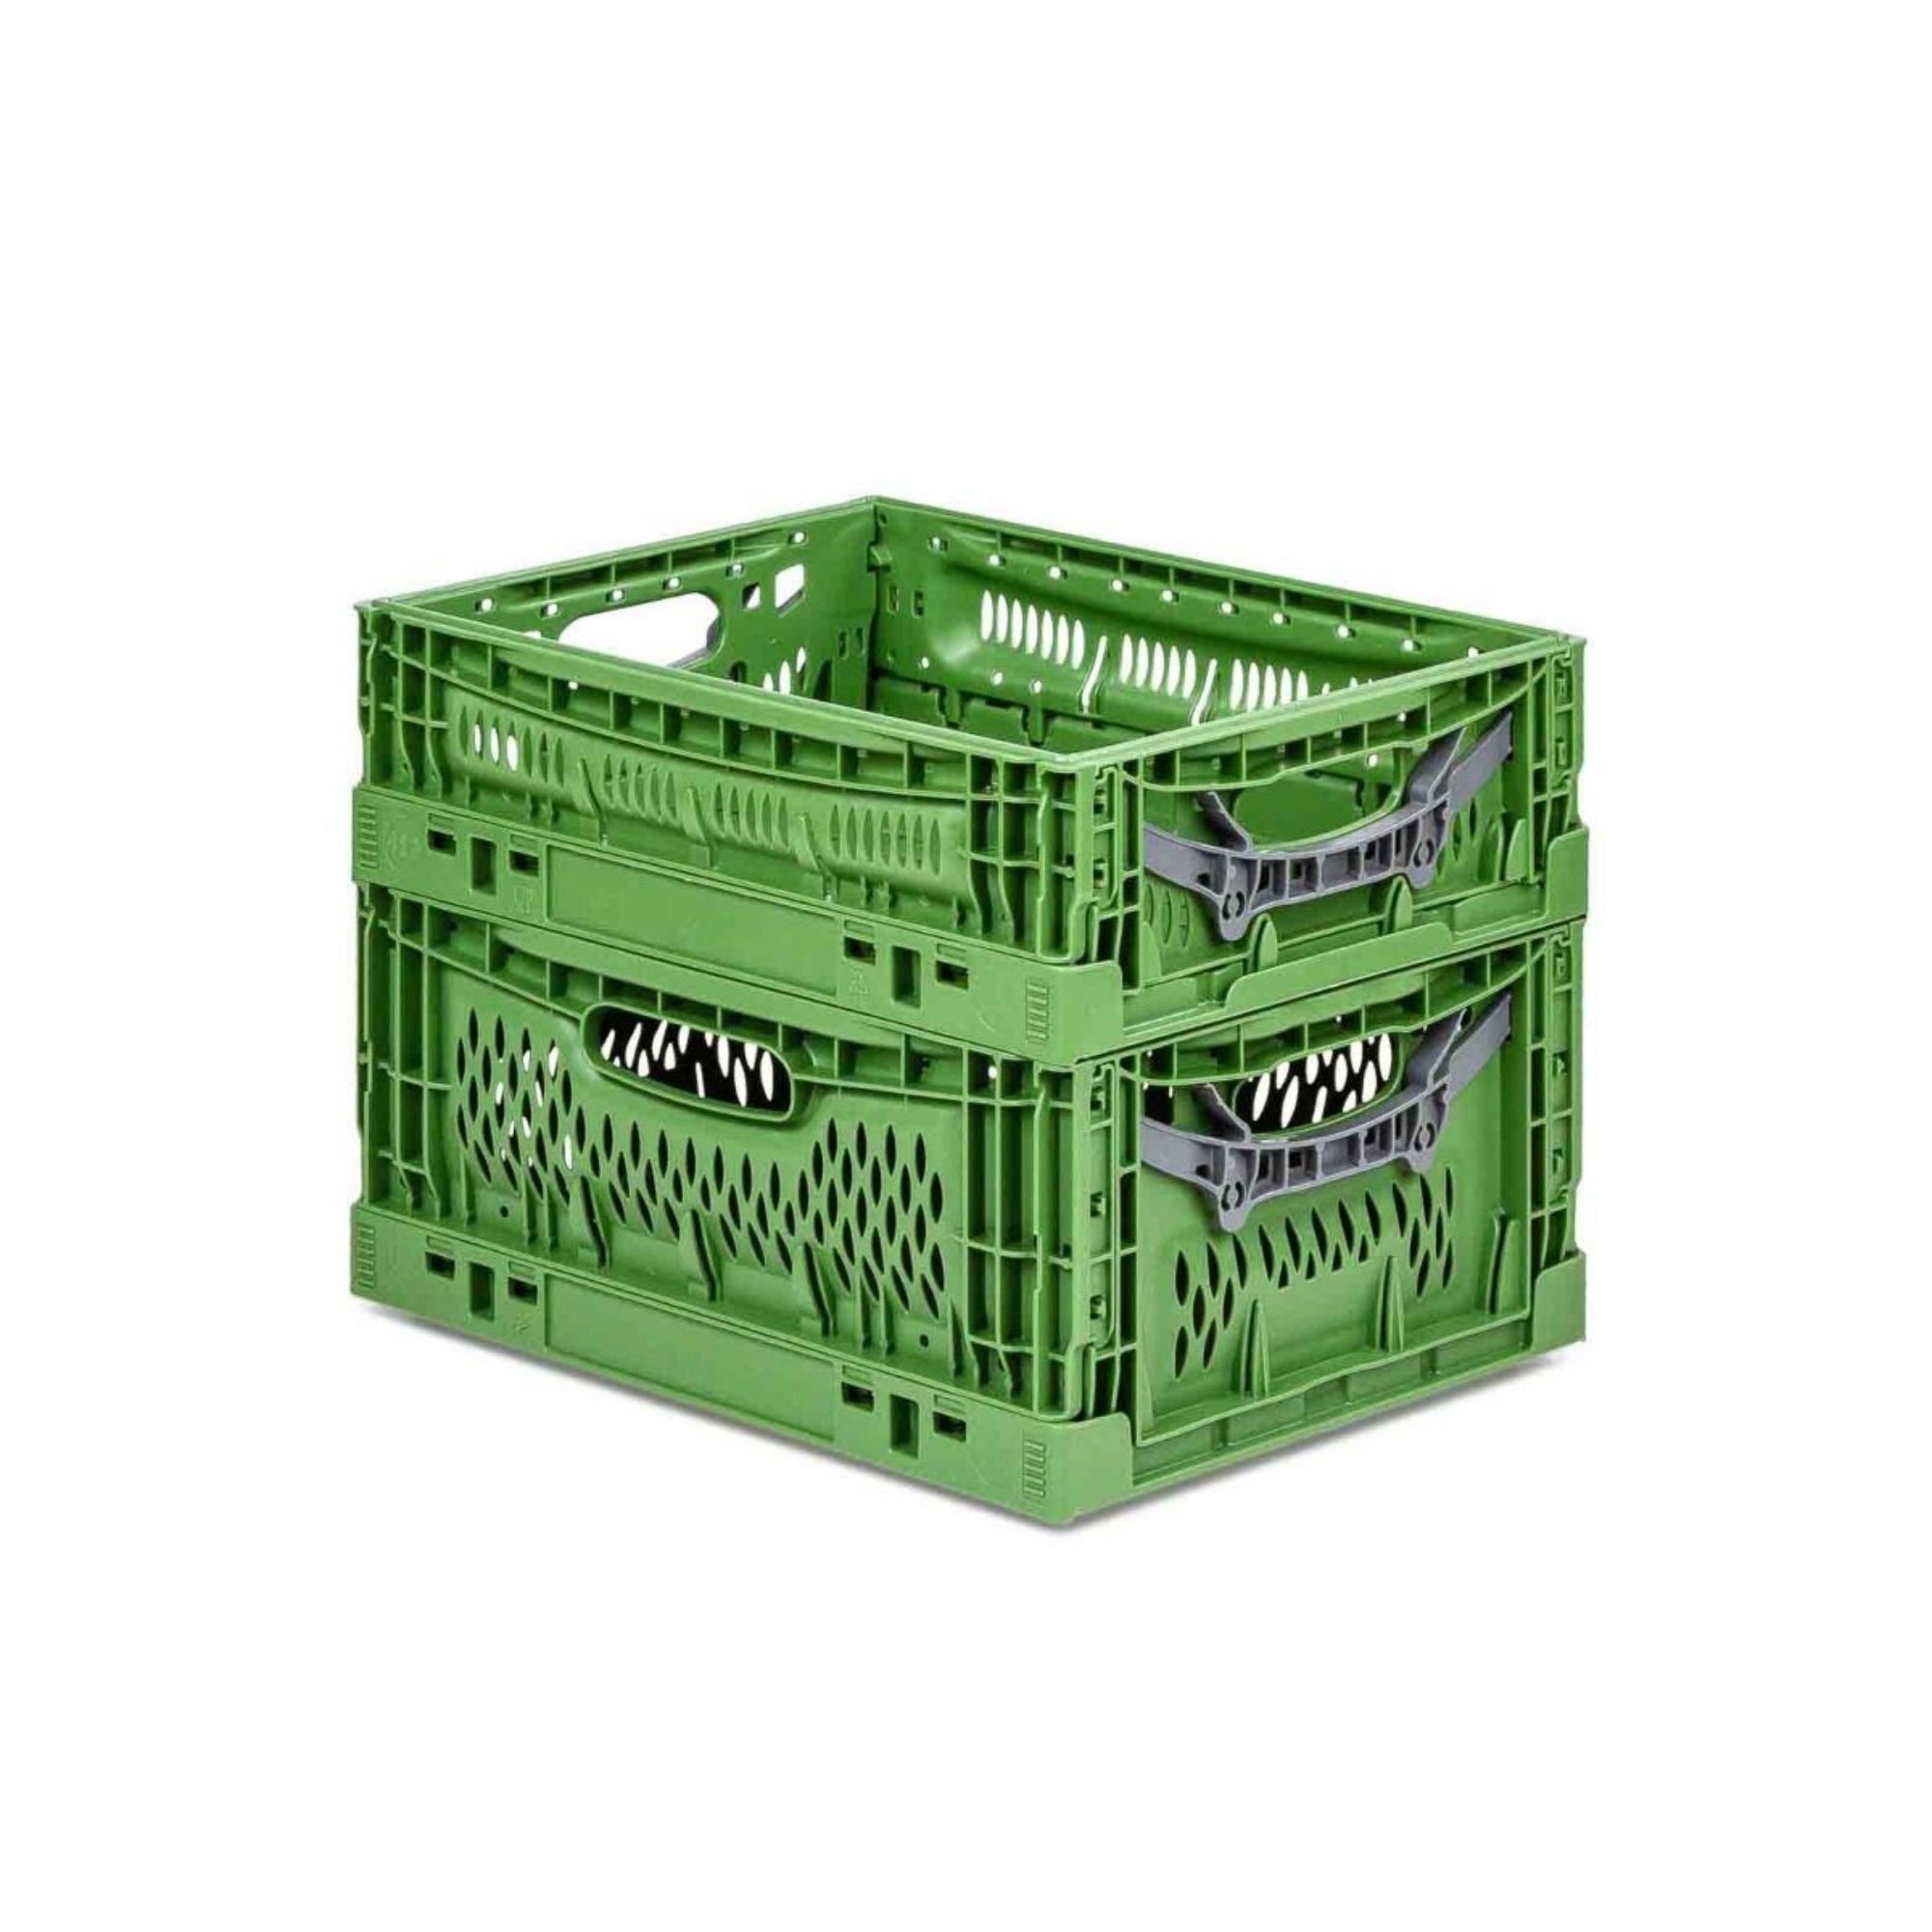 SuperSparSet 5x Stabile Profi-Klappbox Chameleon in Industriequalität | HxBxT 18x40x60cm | 35 Liter | klappbar stapelbar durchbrochen lebensmittelecht | Eurobox Eurobehälter Transportbehälter Stapelbehlter Faltbox